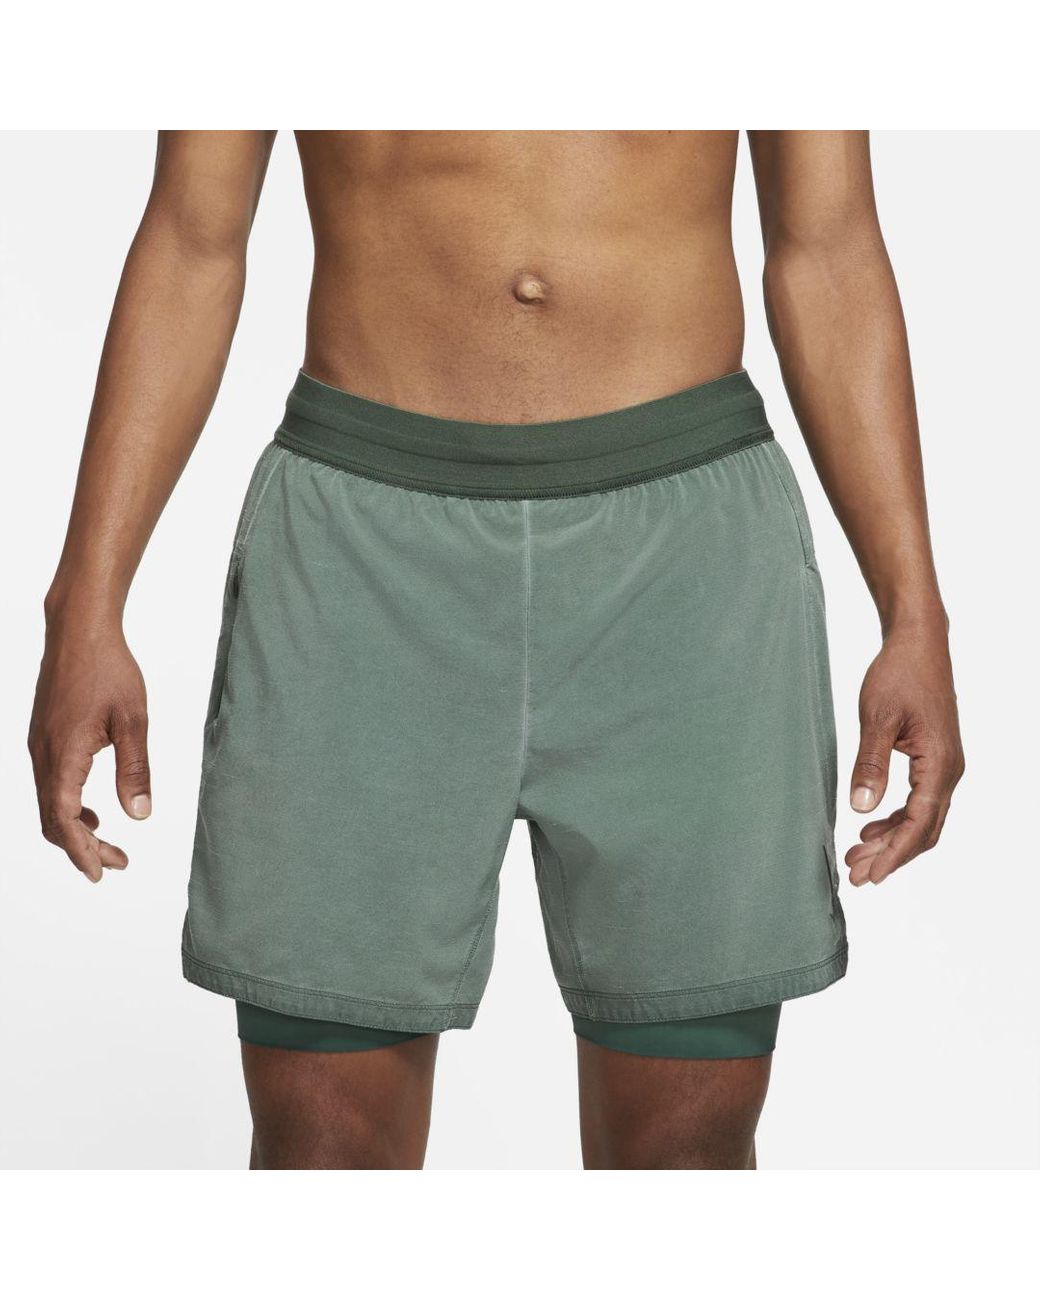 Nike Yoga Dri-fit 2-in-1 Shorts in Green for Men